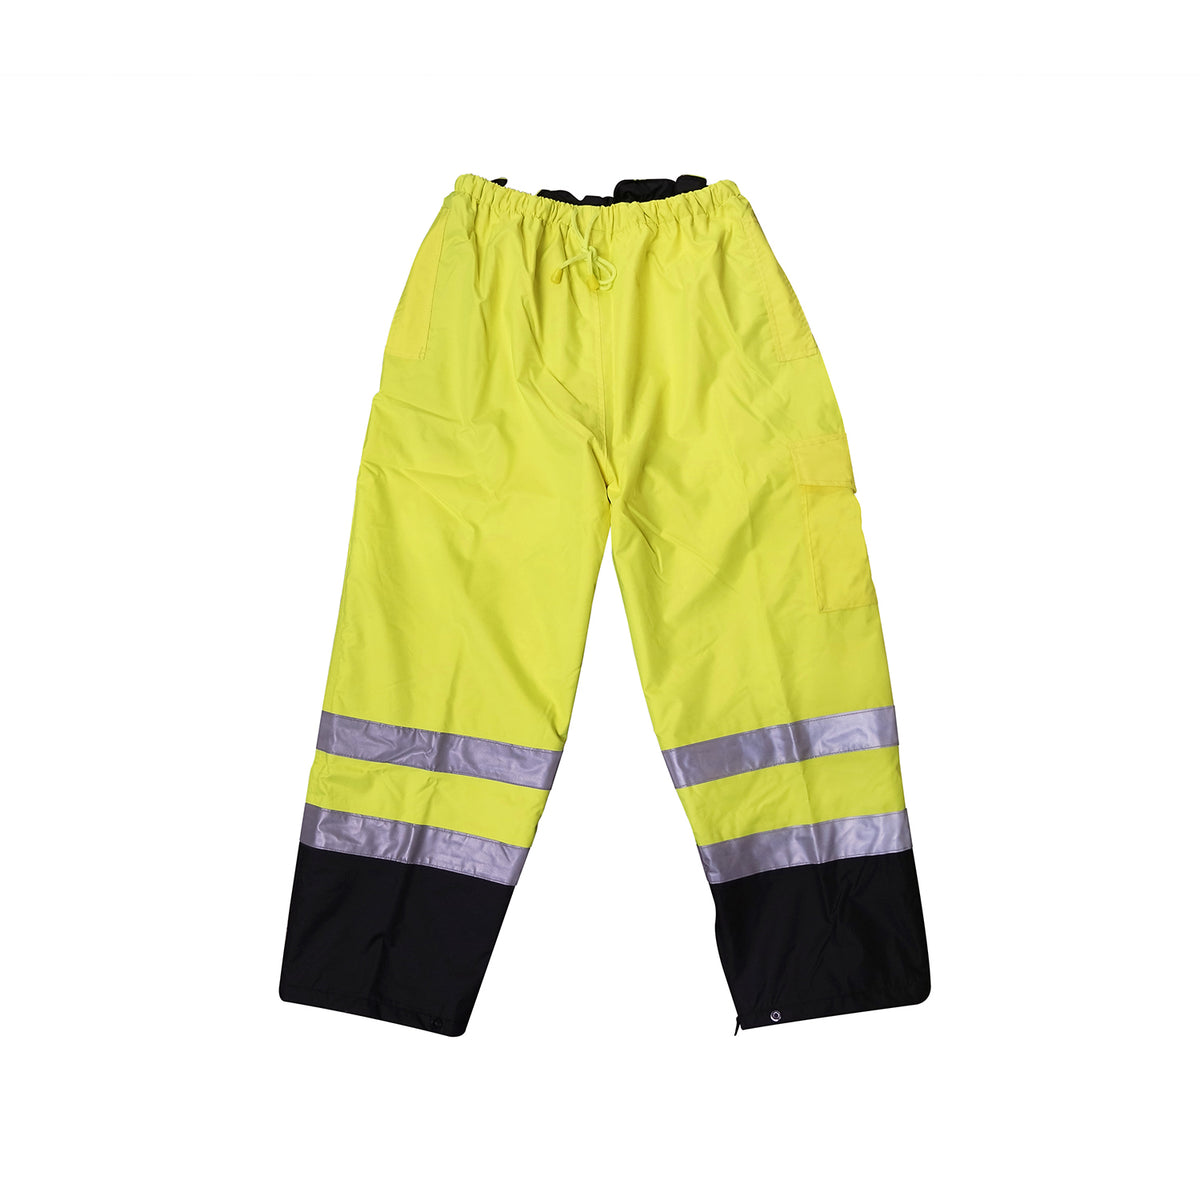 Omni Thermal Rainwear Pants - Neon Yellow -Safety- eGPS Solutions Inc.